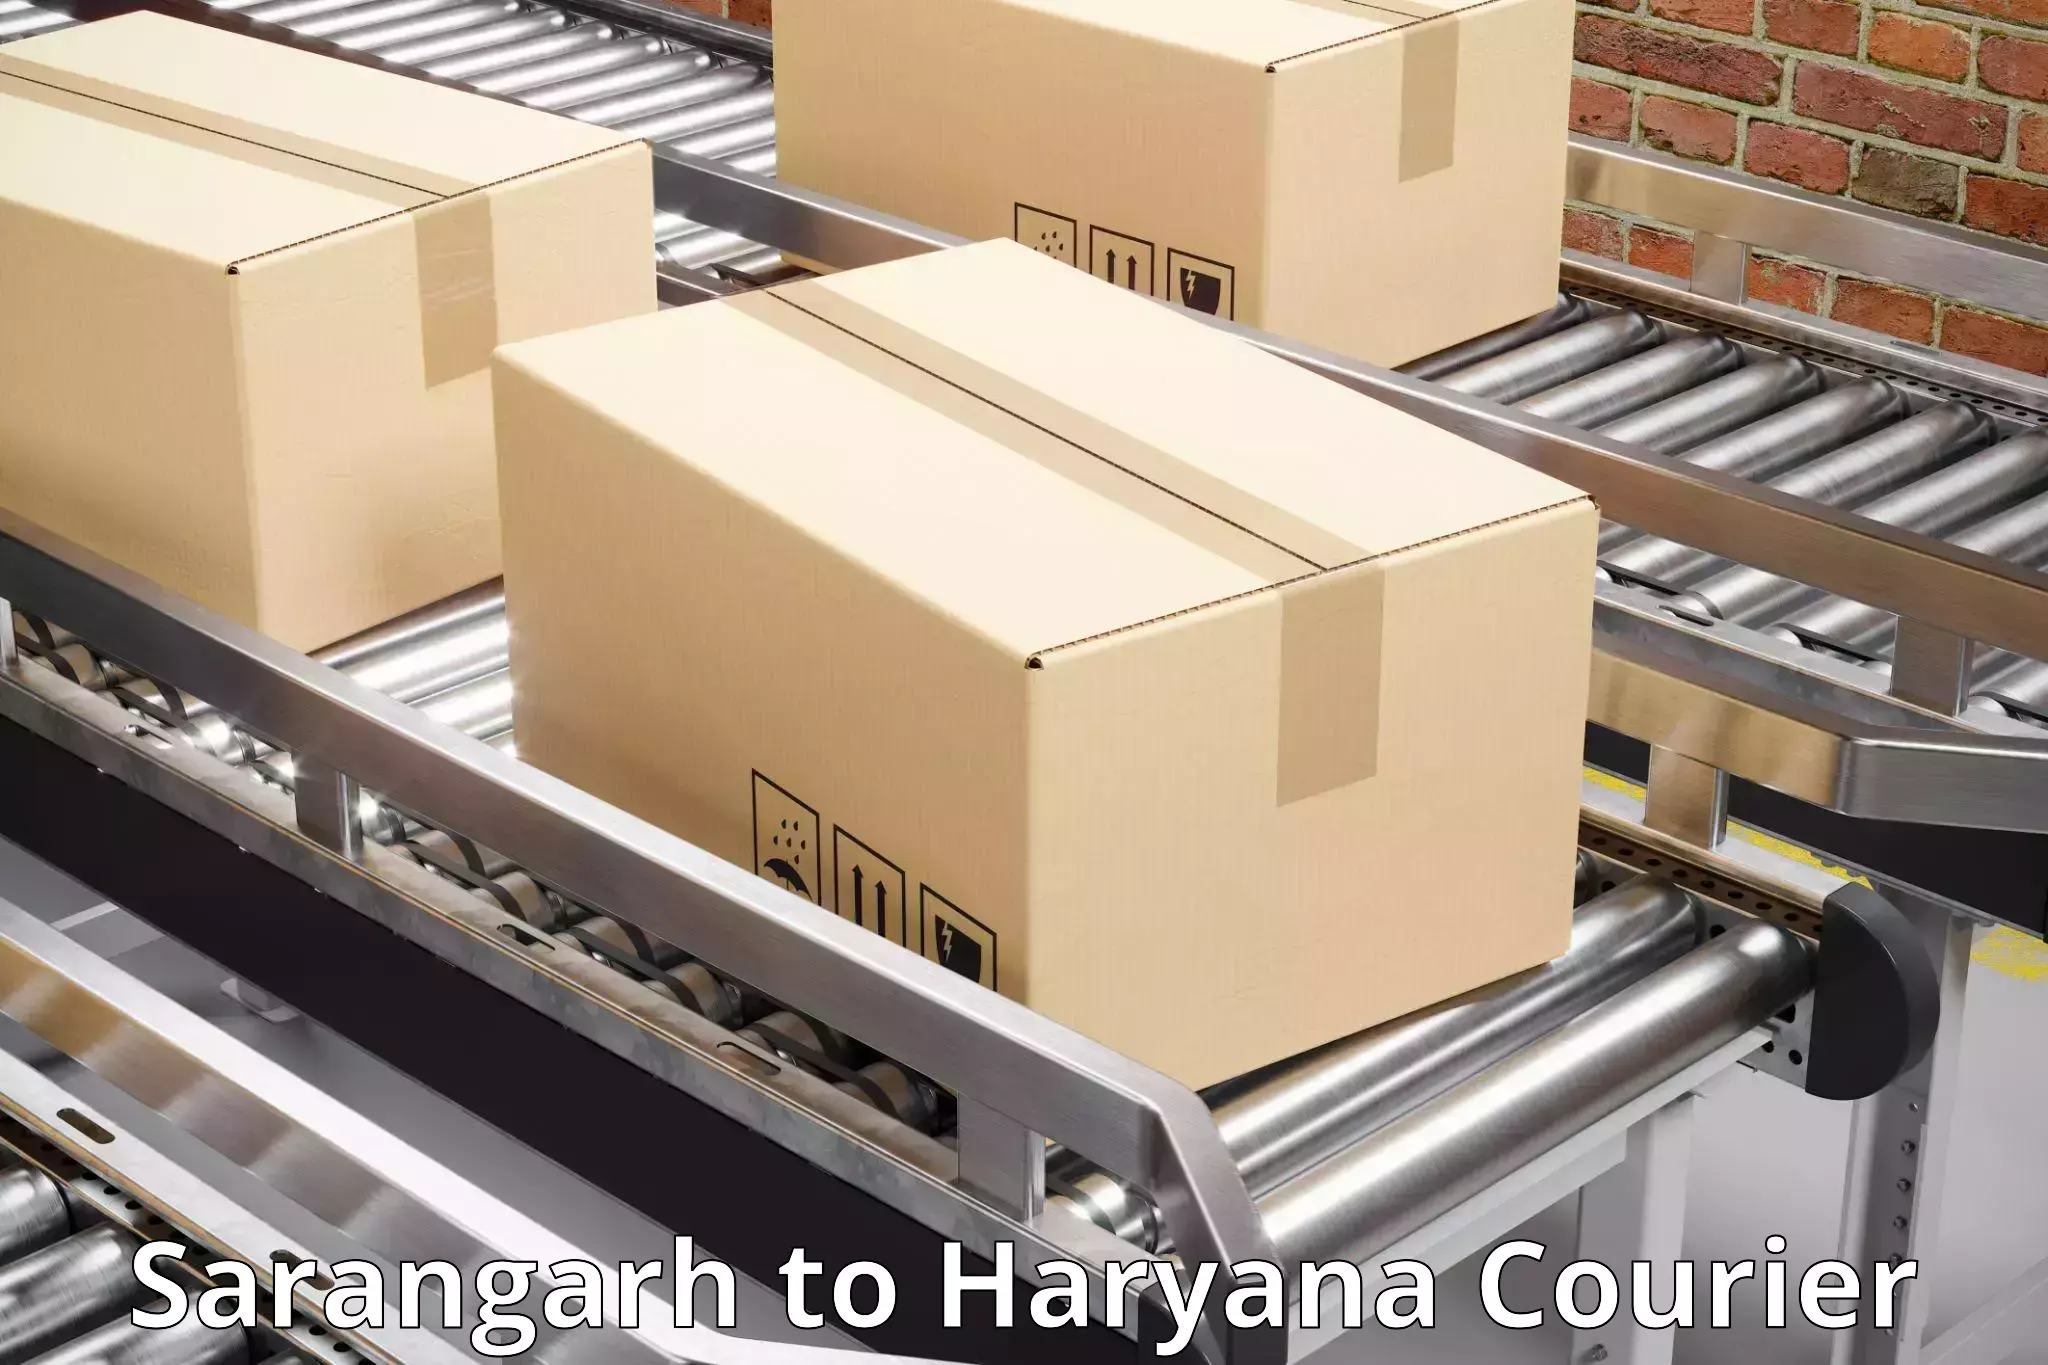 Customized delivery options Sarangarh to Gurugram